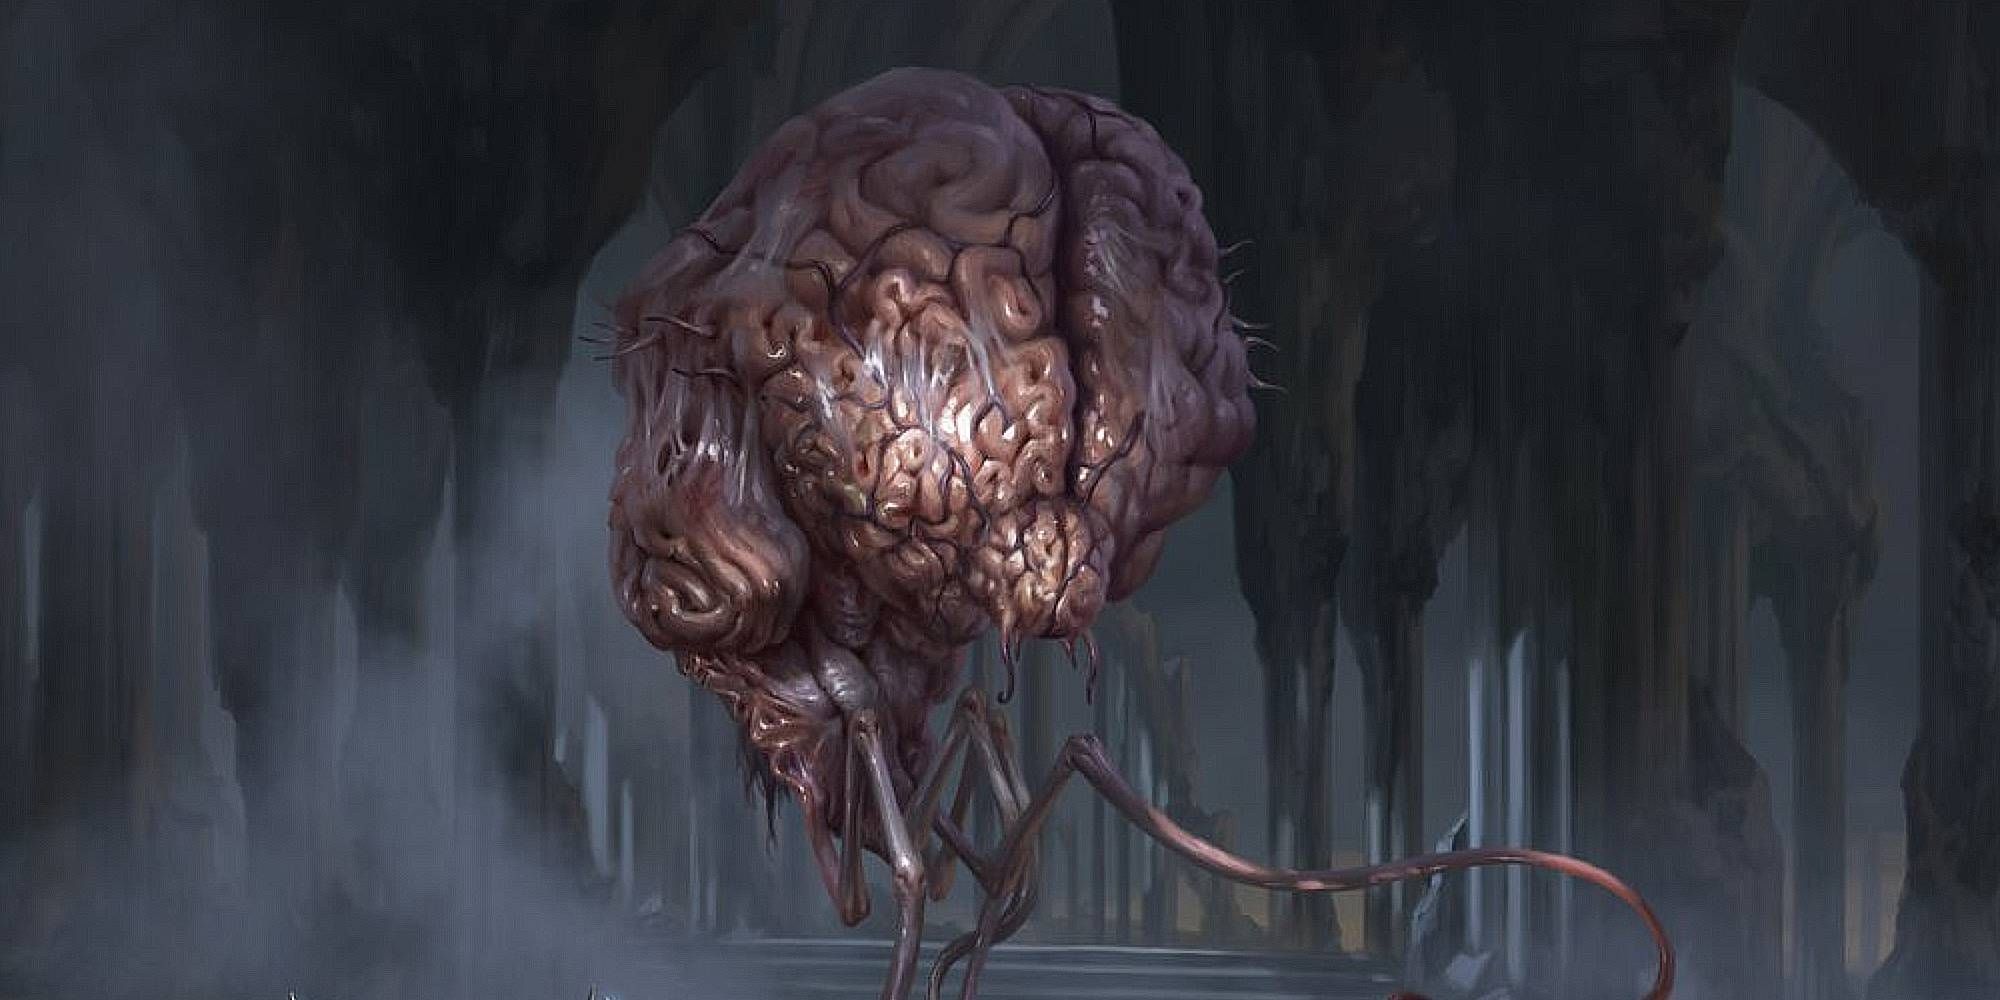 An Elder Brain floats in a dark cavern